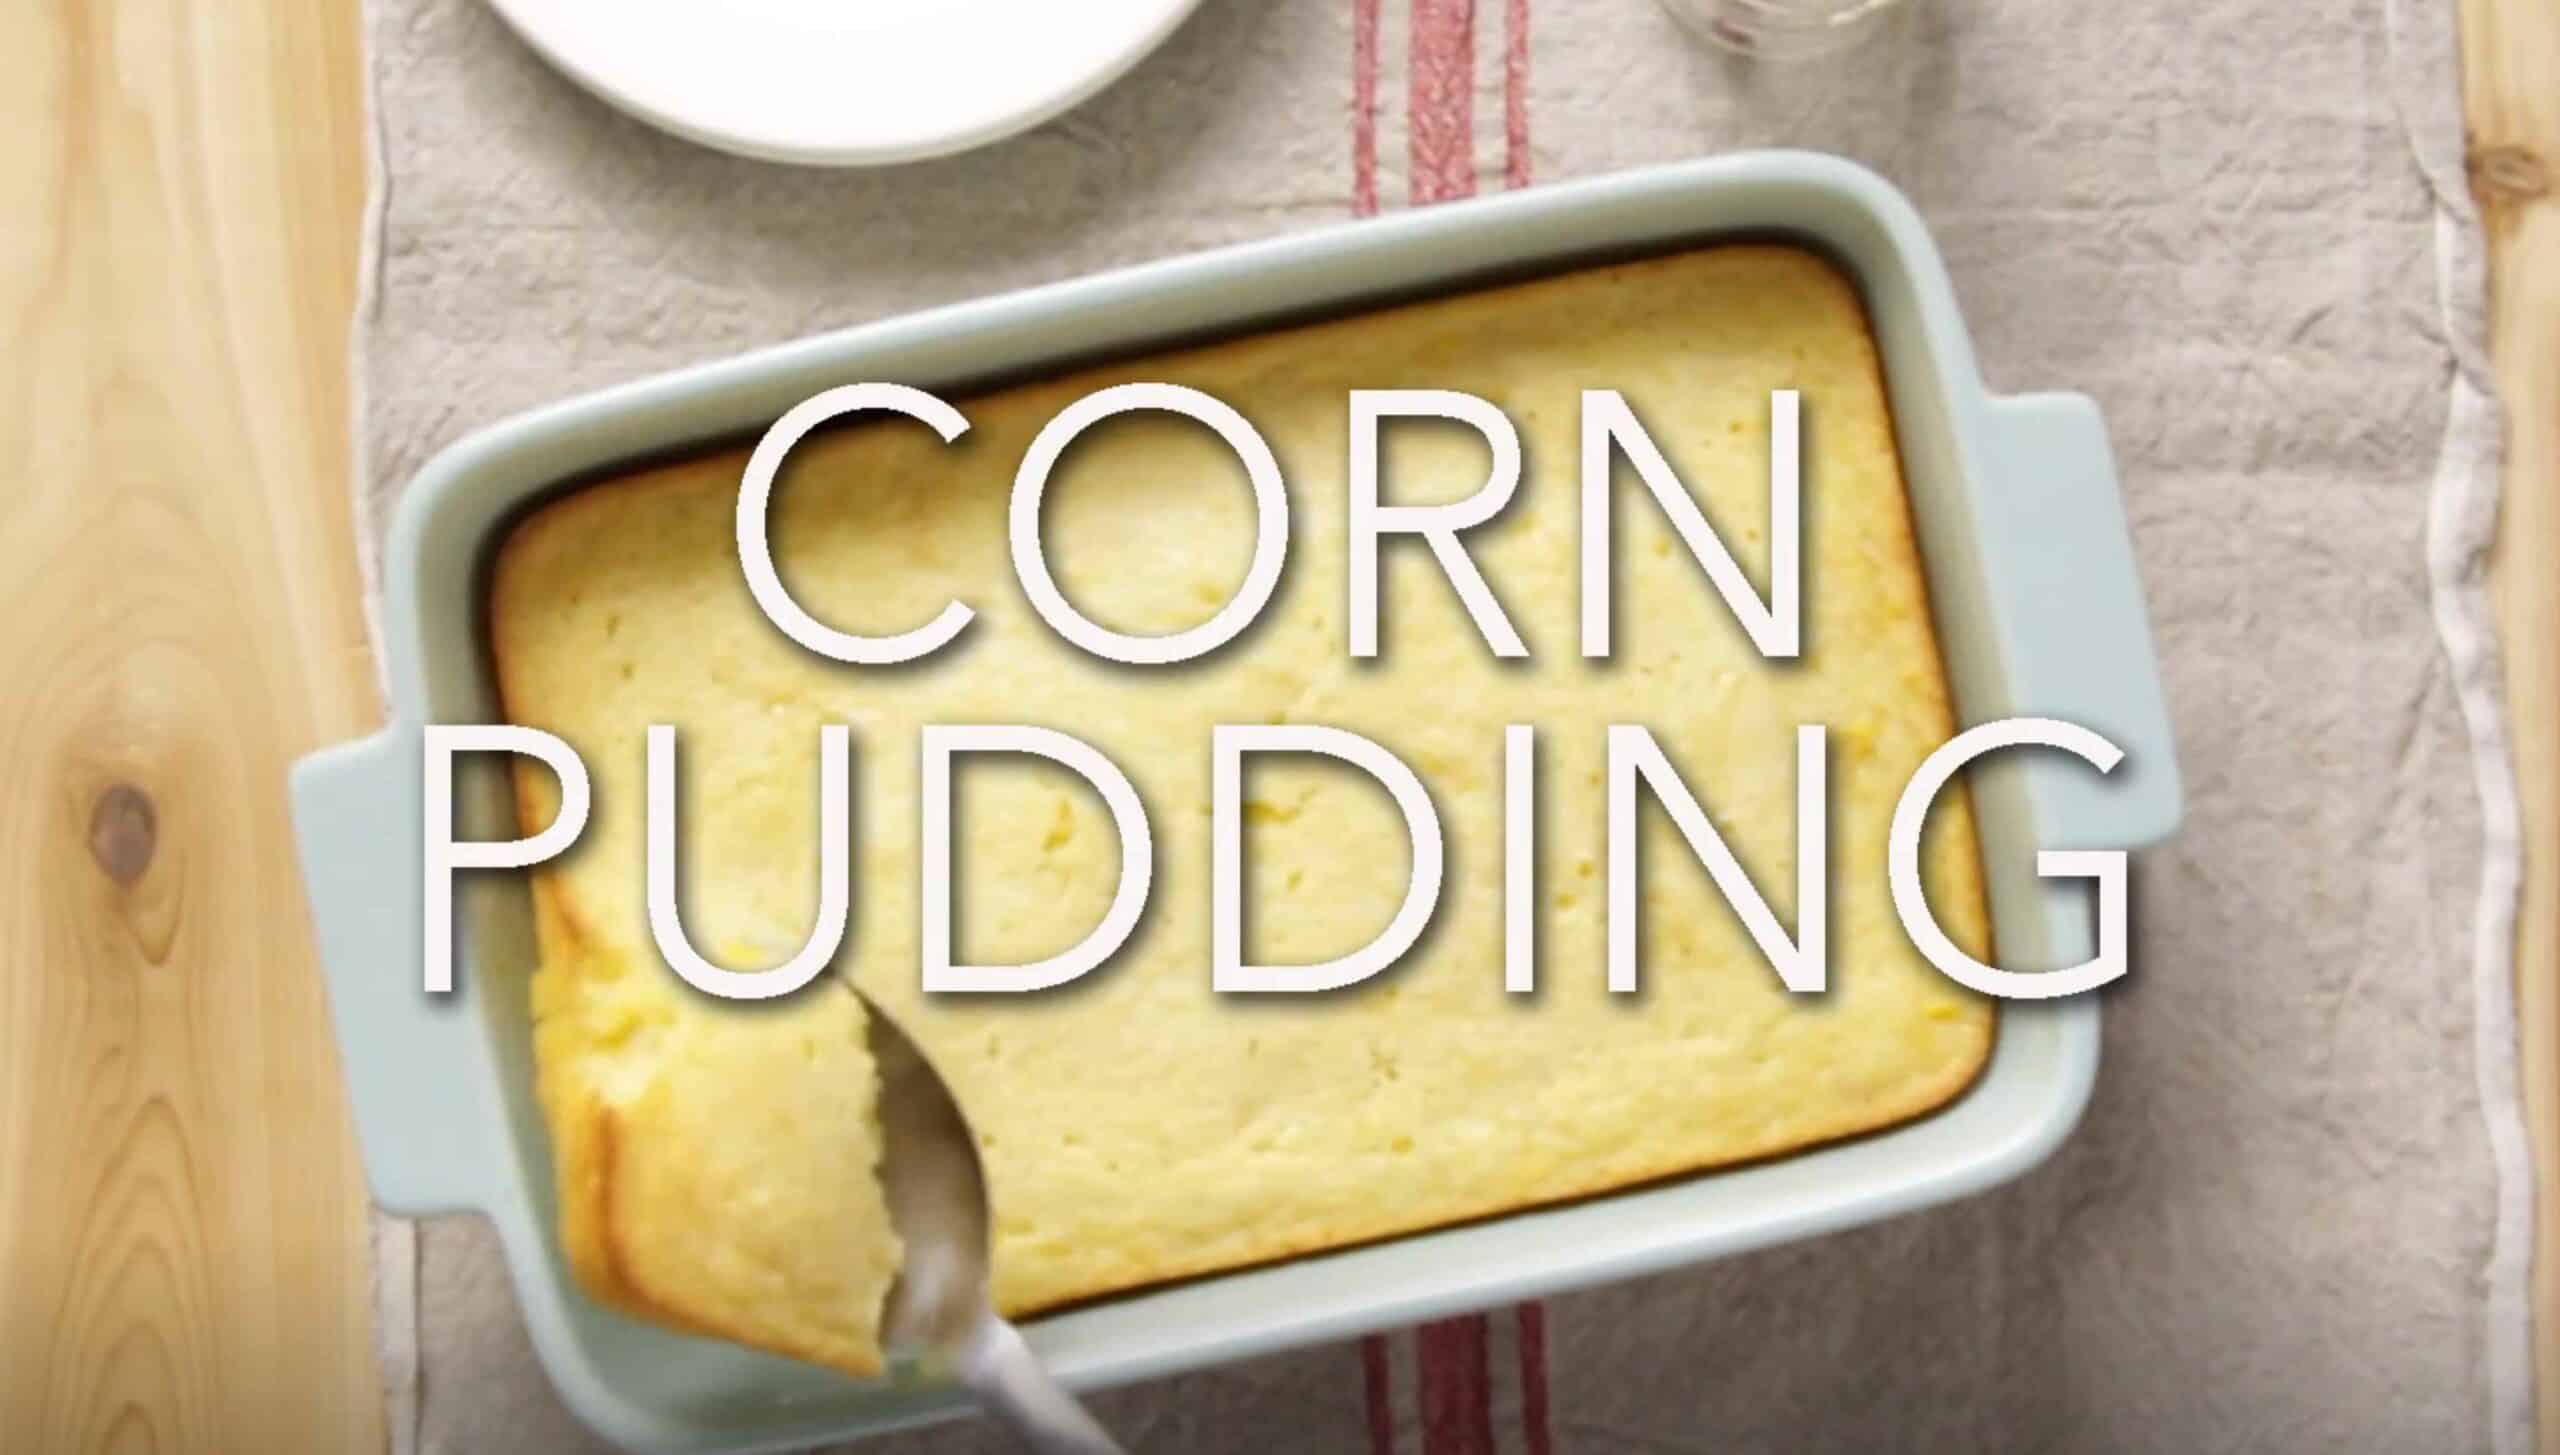 Corned Pudding